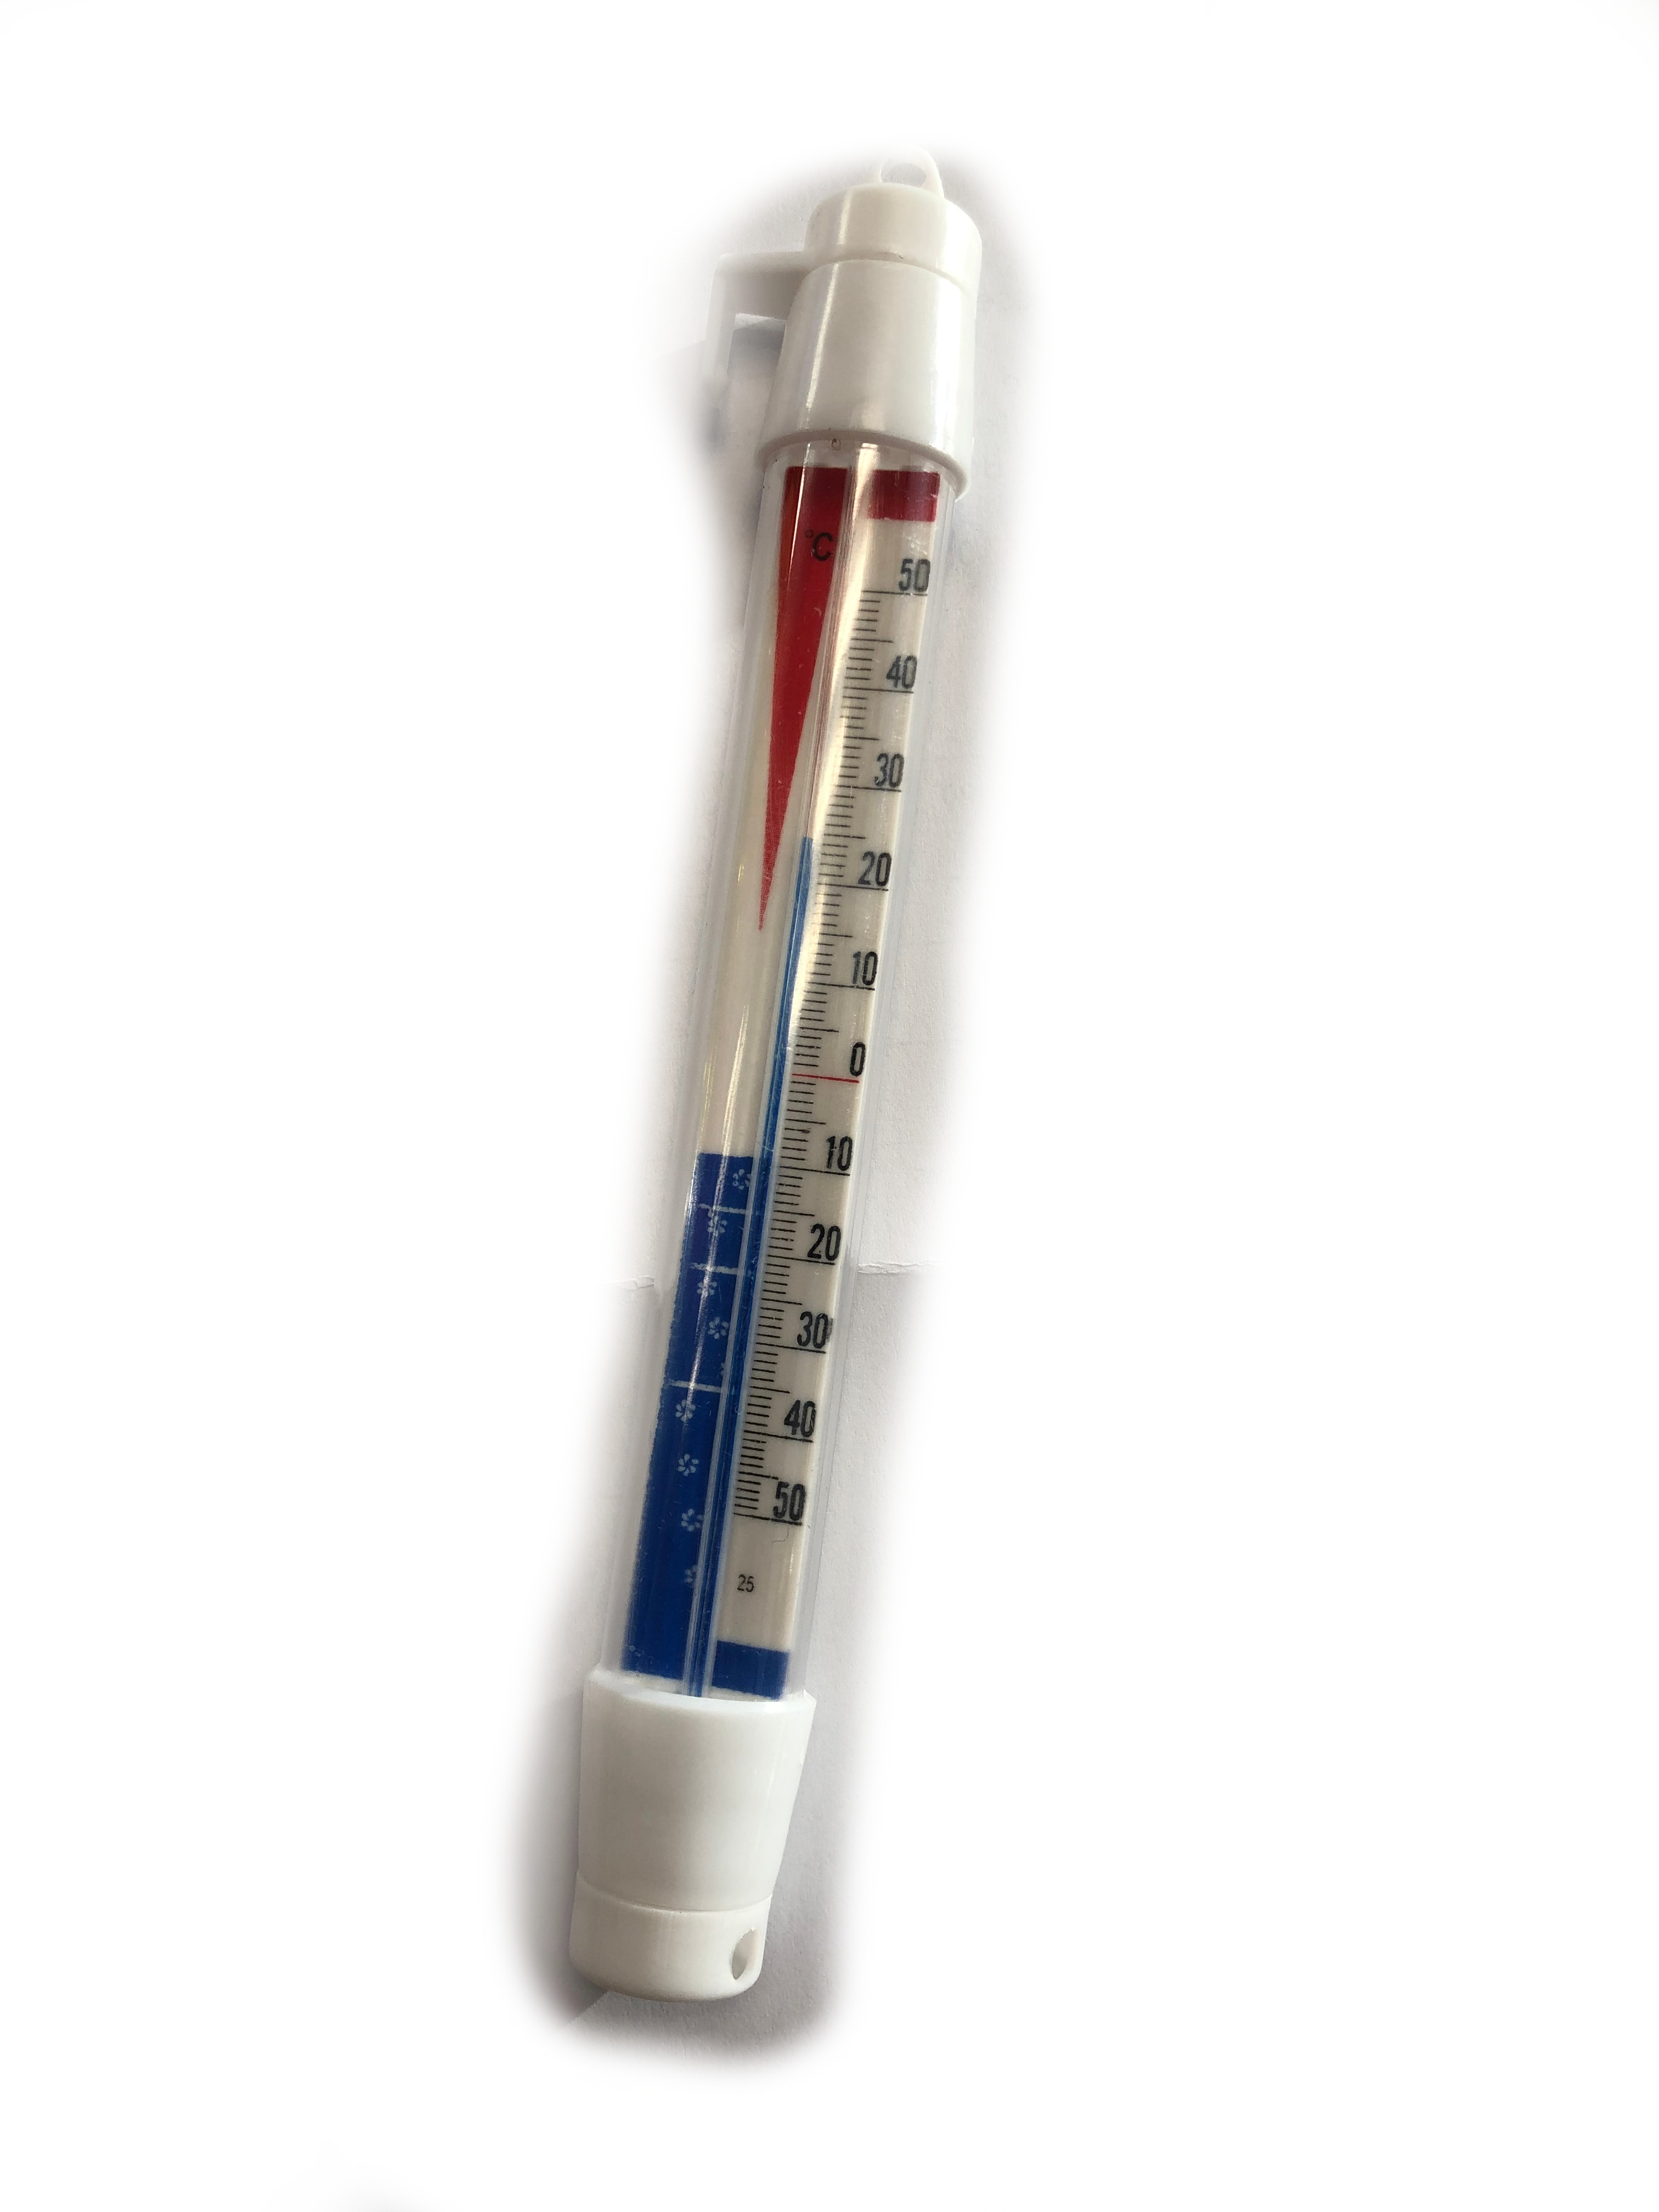 Thermomètre EASY MAKE DE FRIGO AIMANTE